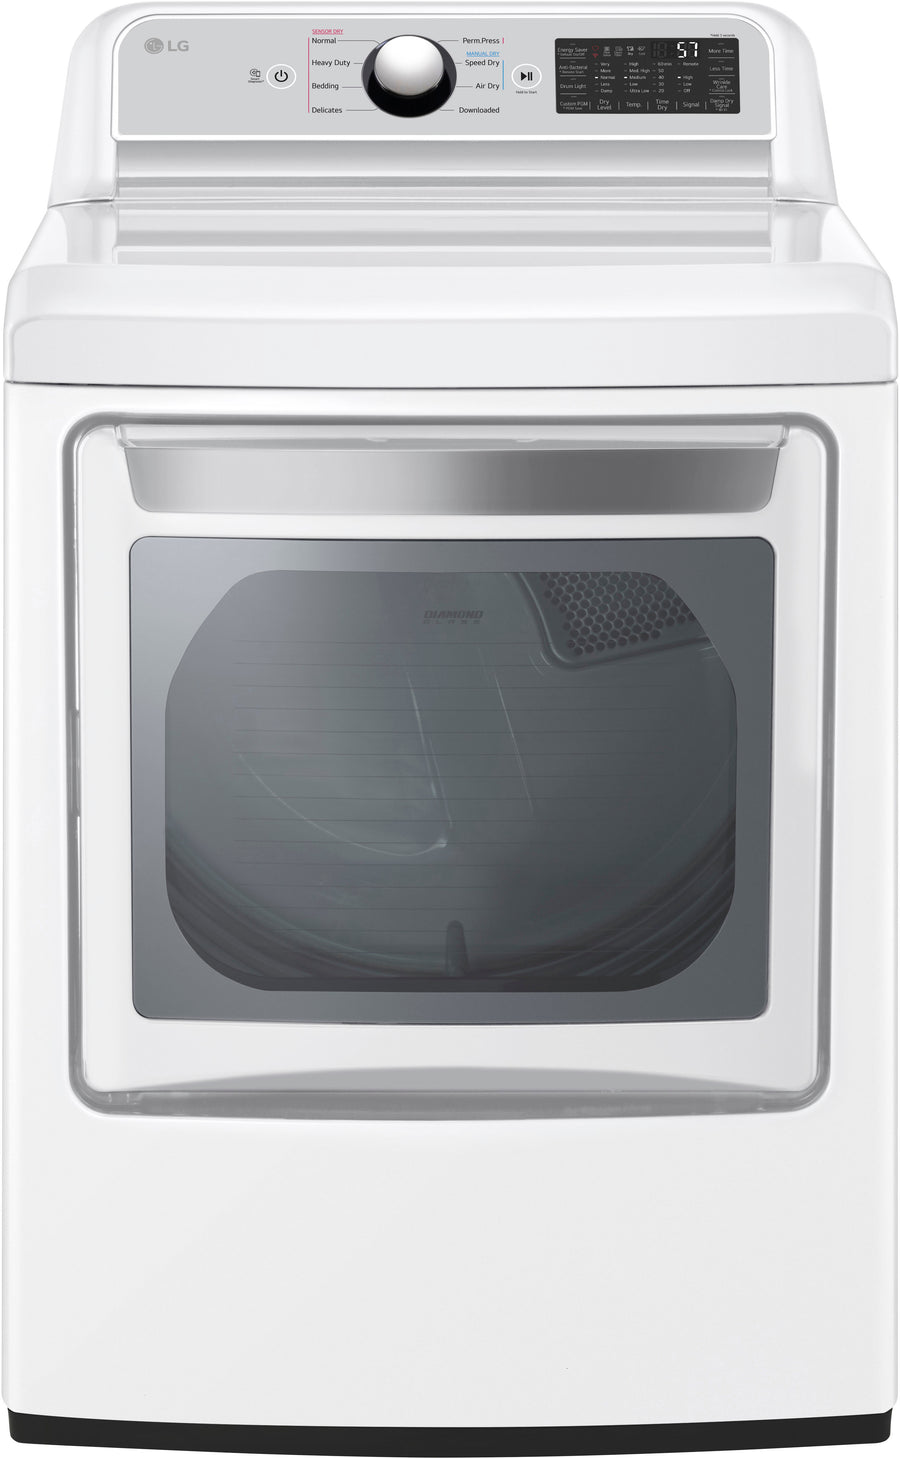 LG - 7.3 Cu. Ft. Smart Electric Dryer with EasyLoad Door - White_0